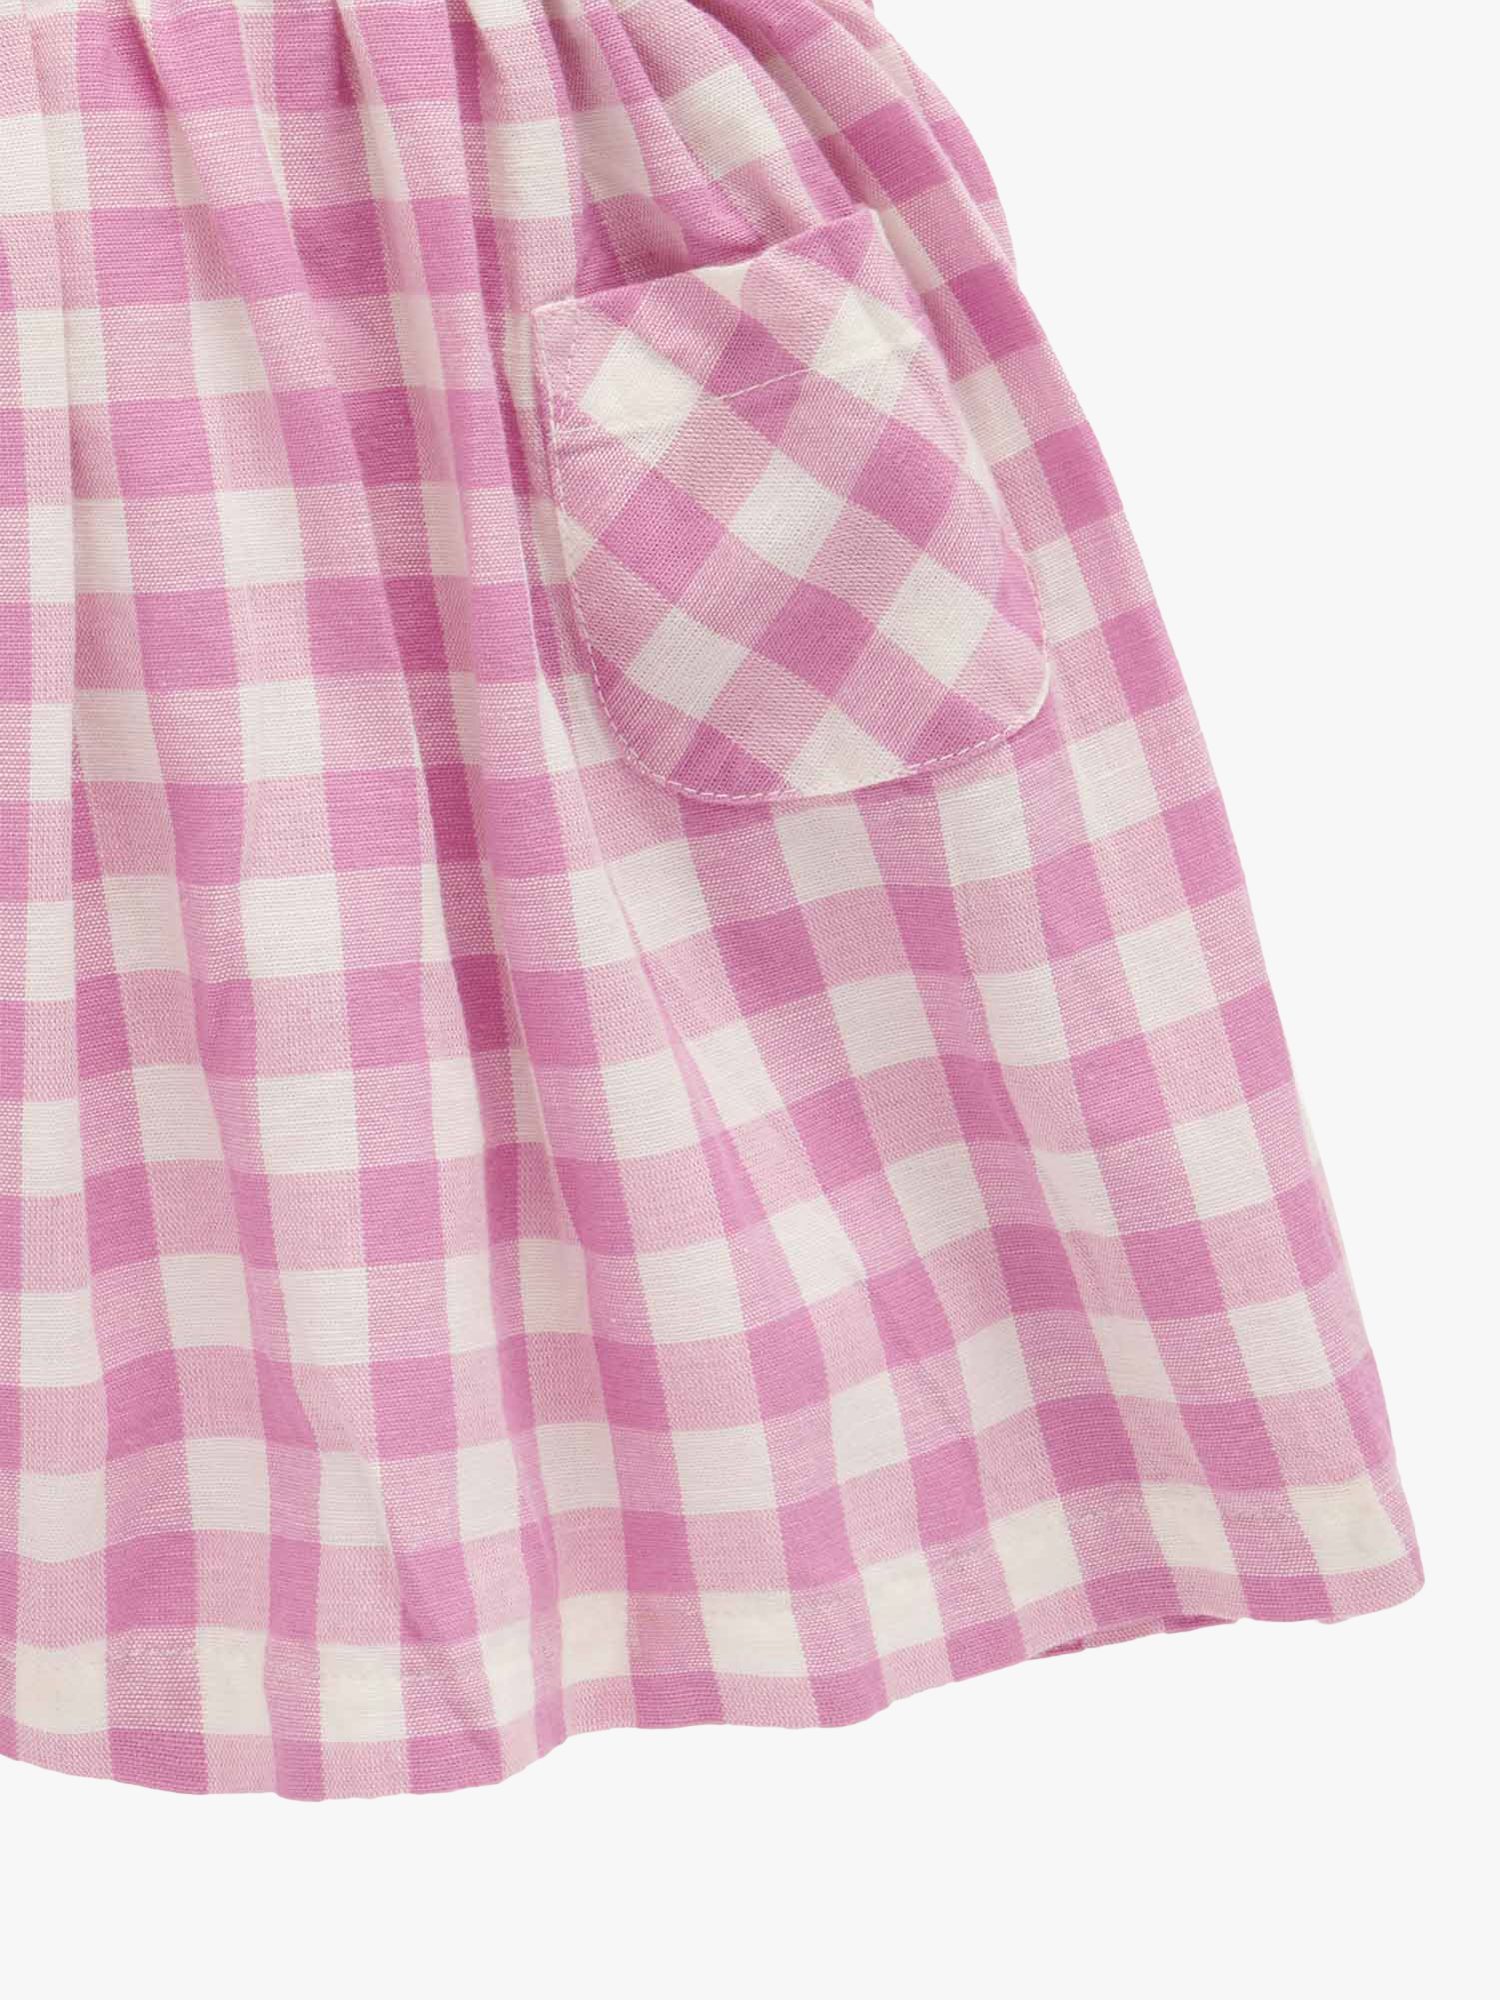 Purebaby Baby Organic Cotton Blend Gingham Pinafore Dress, Pink, 3-6 months